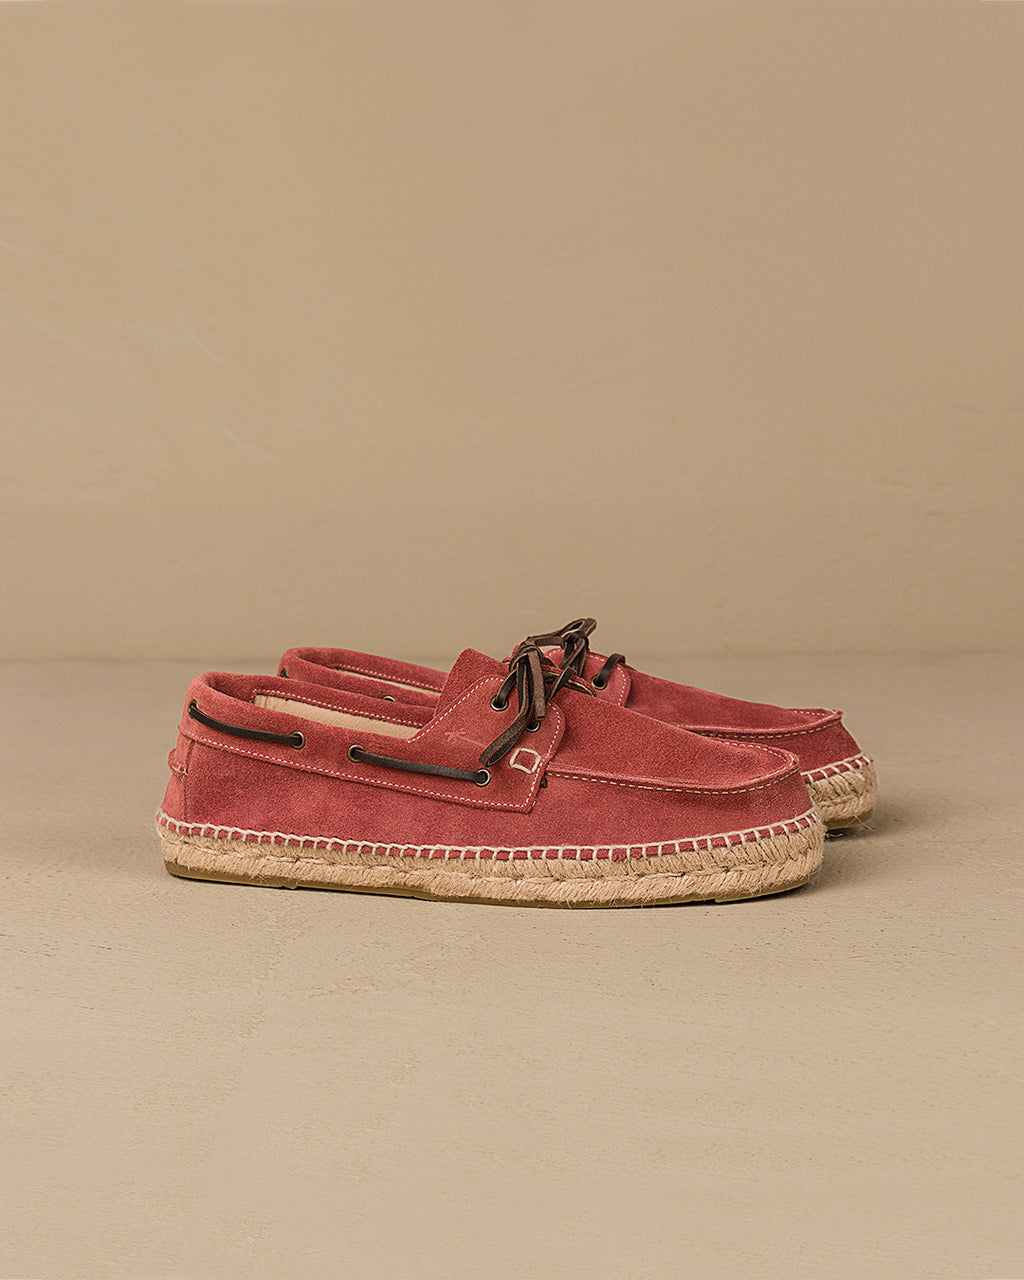 Suede Boat-Shoes Espadrilles - Hamptons Terracotta